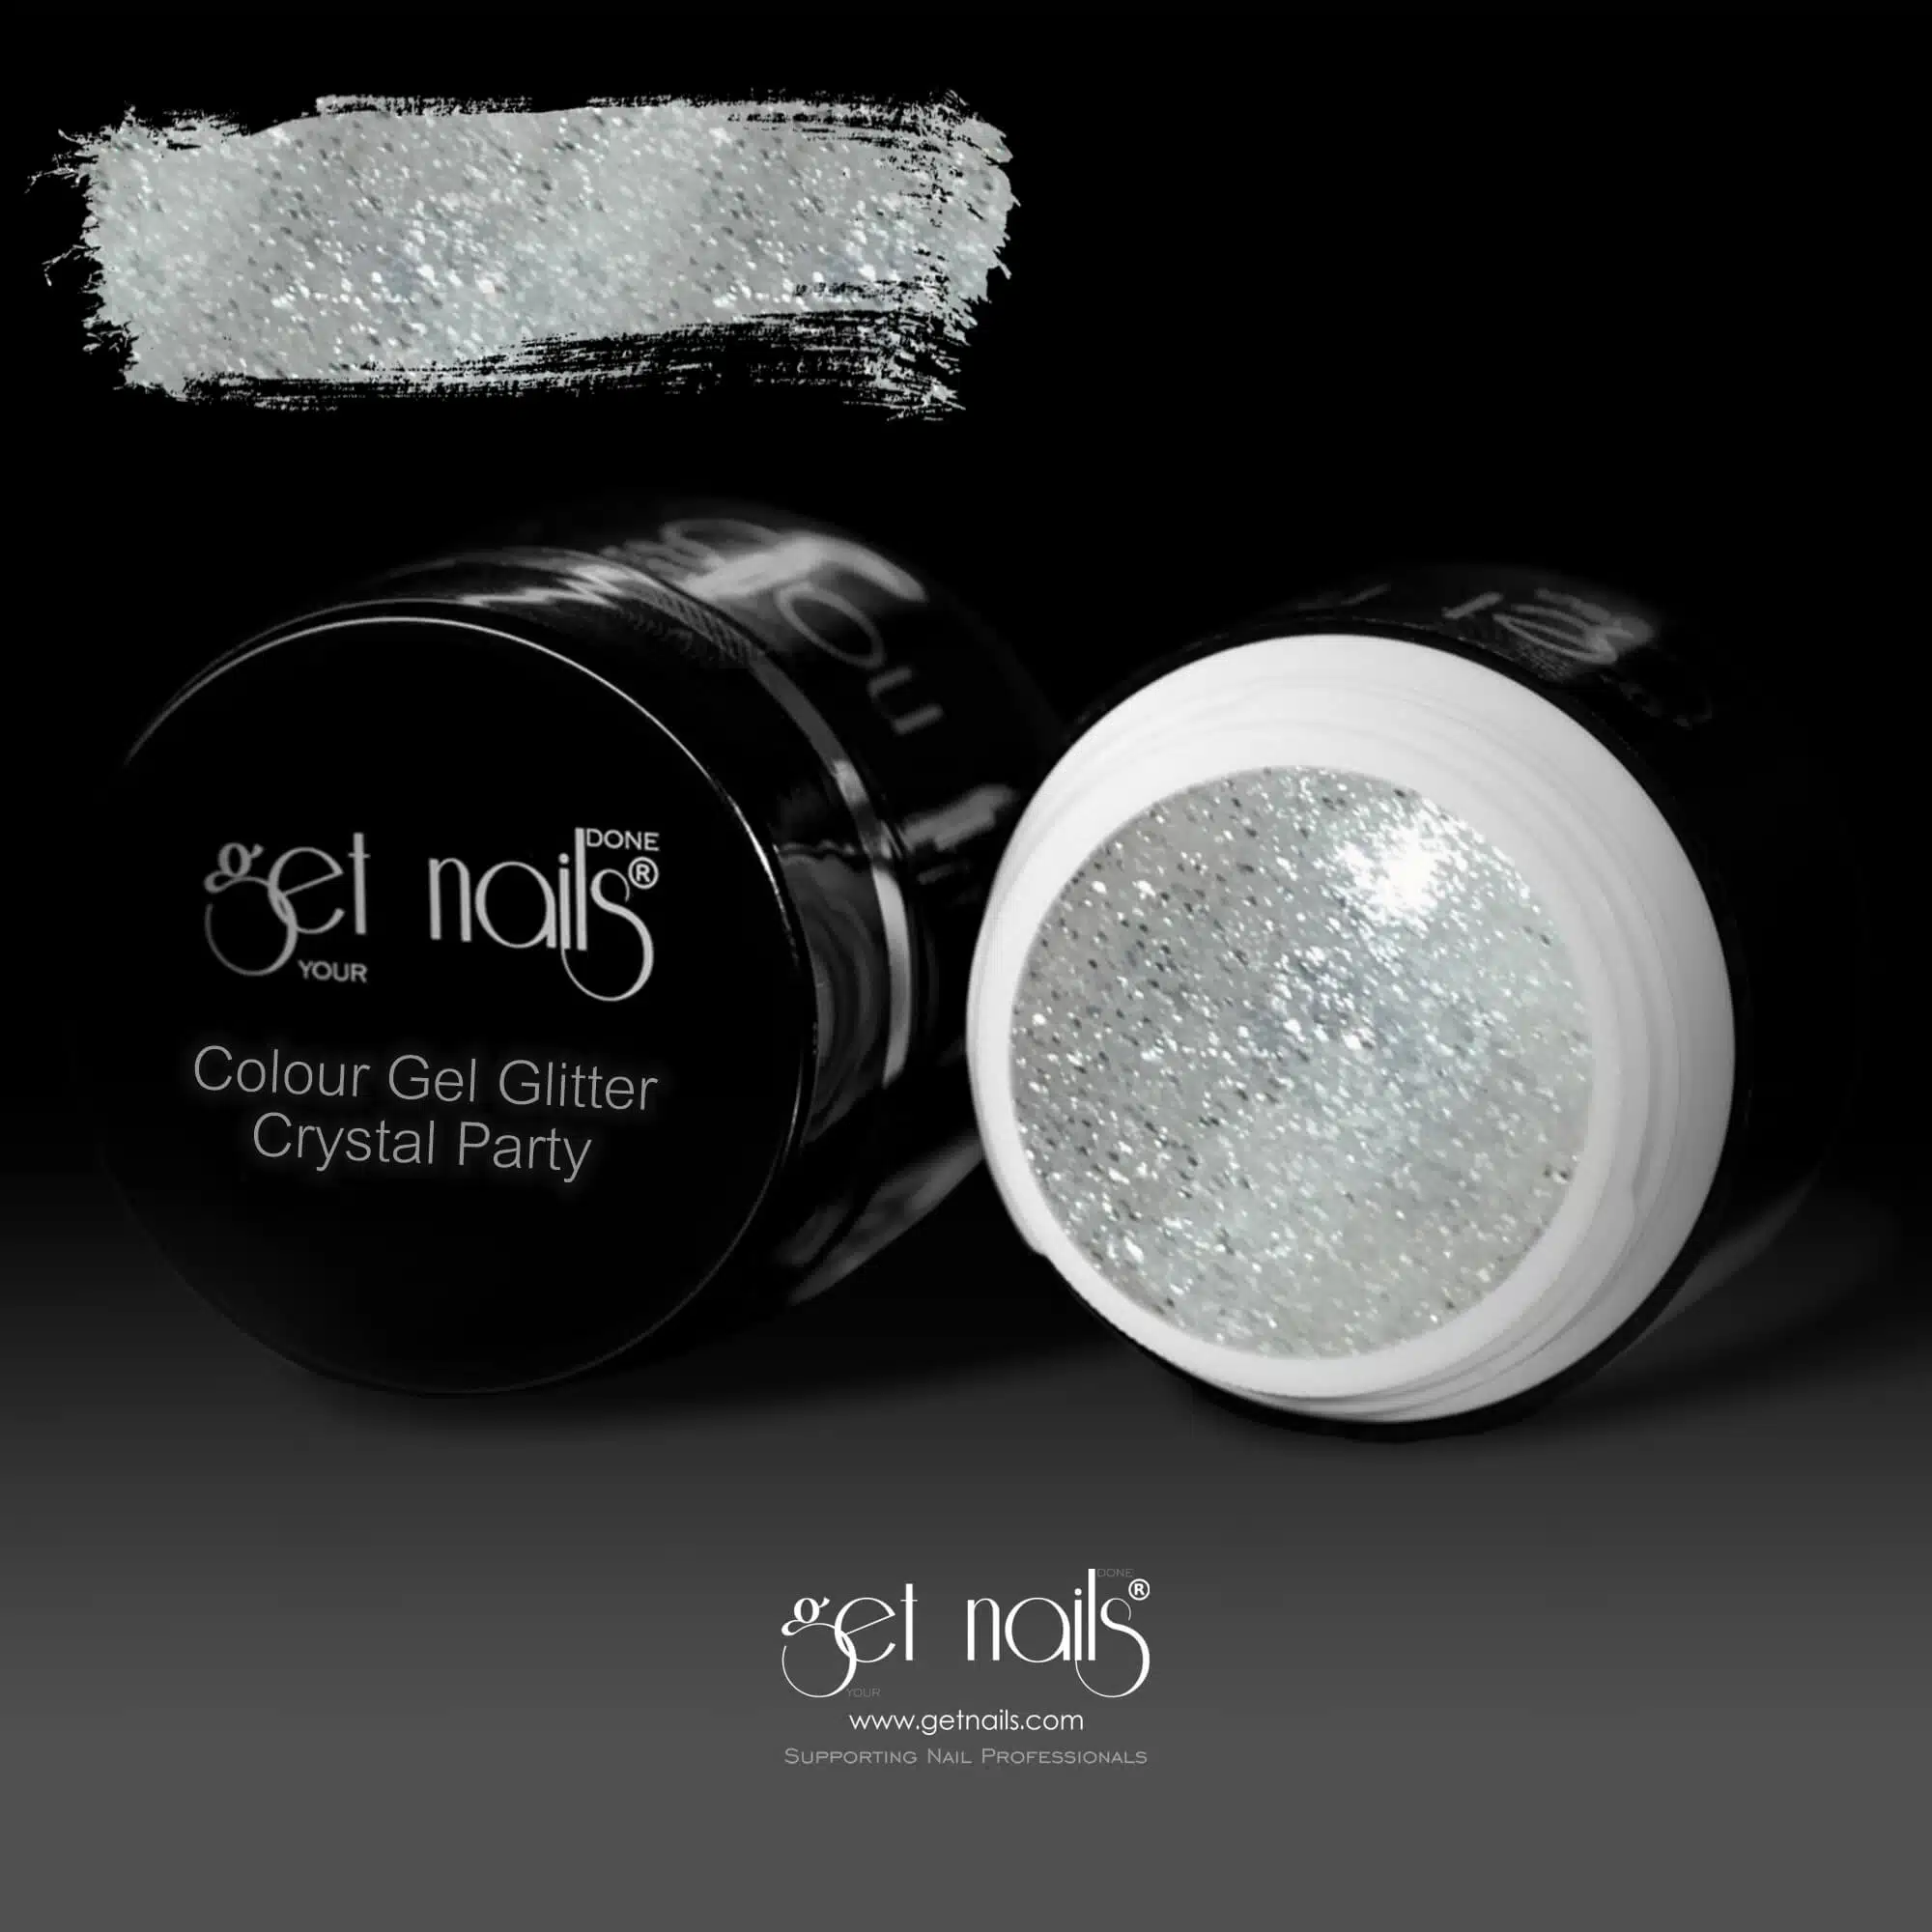 Get Nails Austria - Color Gel Glitter Crystal Party 5g